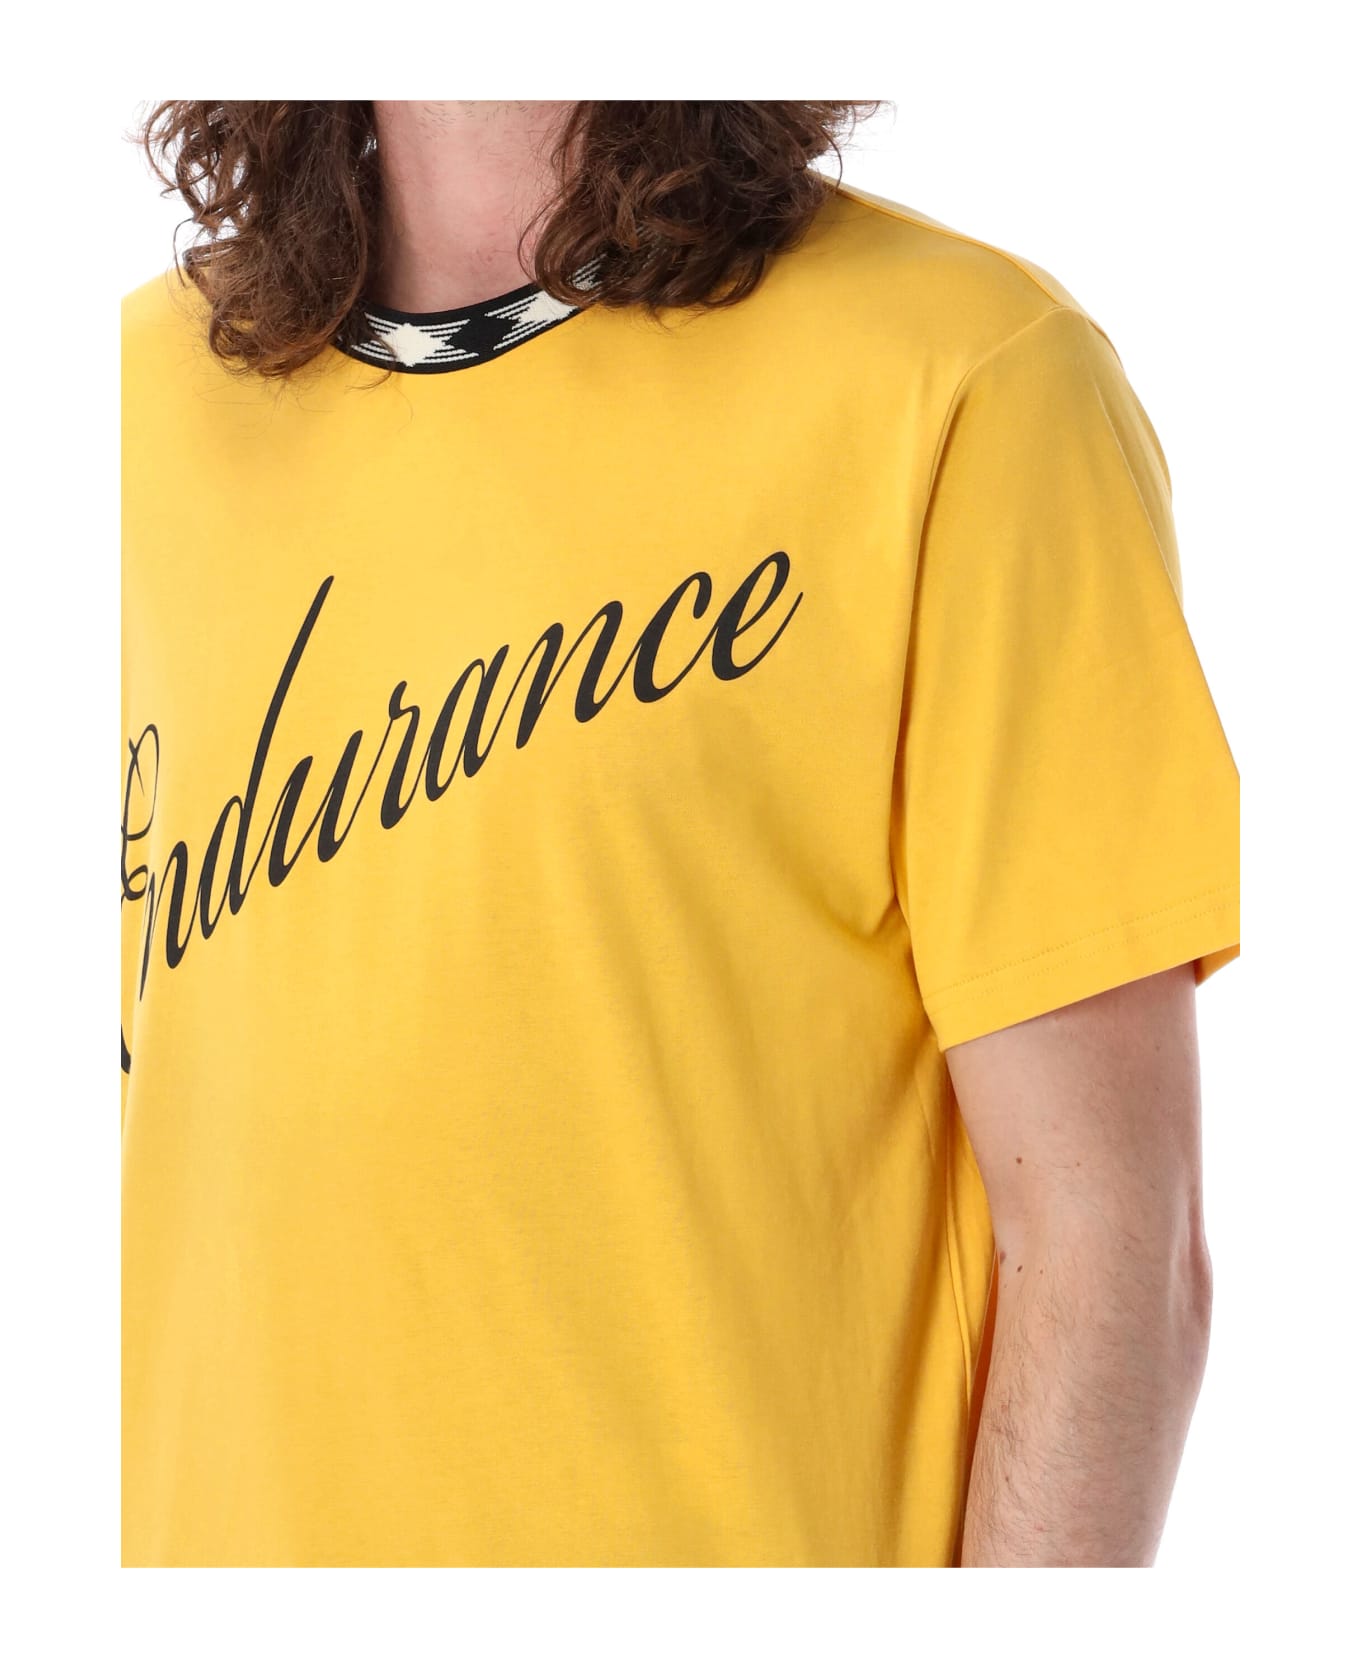 Wales Bonner Endurance T-shirt - TURMERIC シャツ